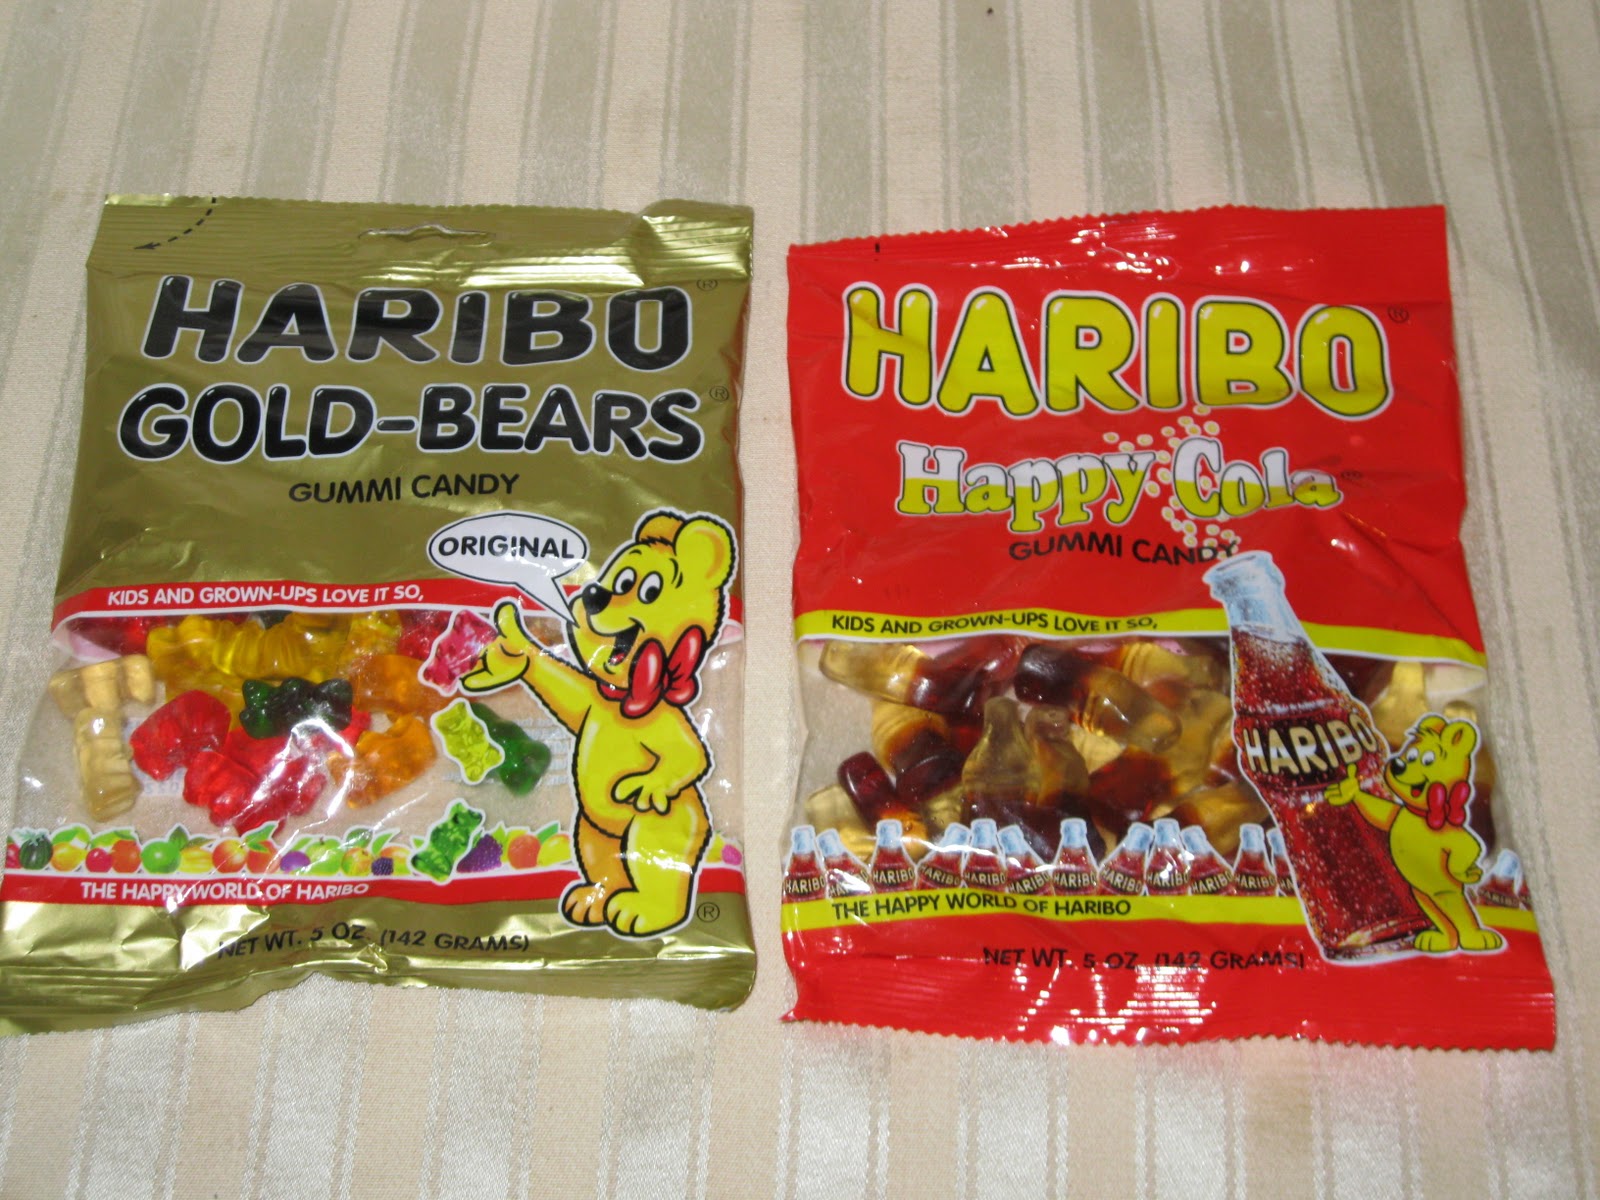 The Aldi Spot Helping You Save Aldi Product Feature Haribo Gummi Bears At Aldi 0 89